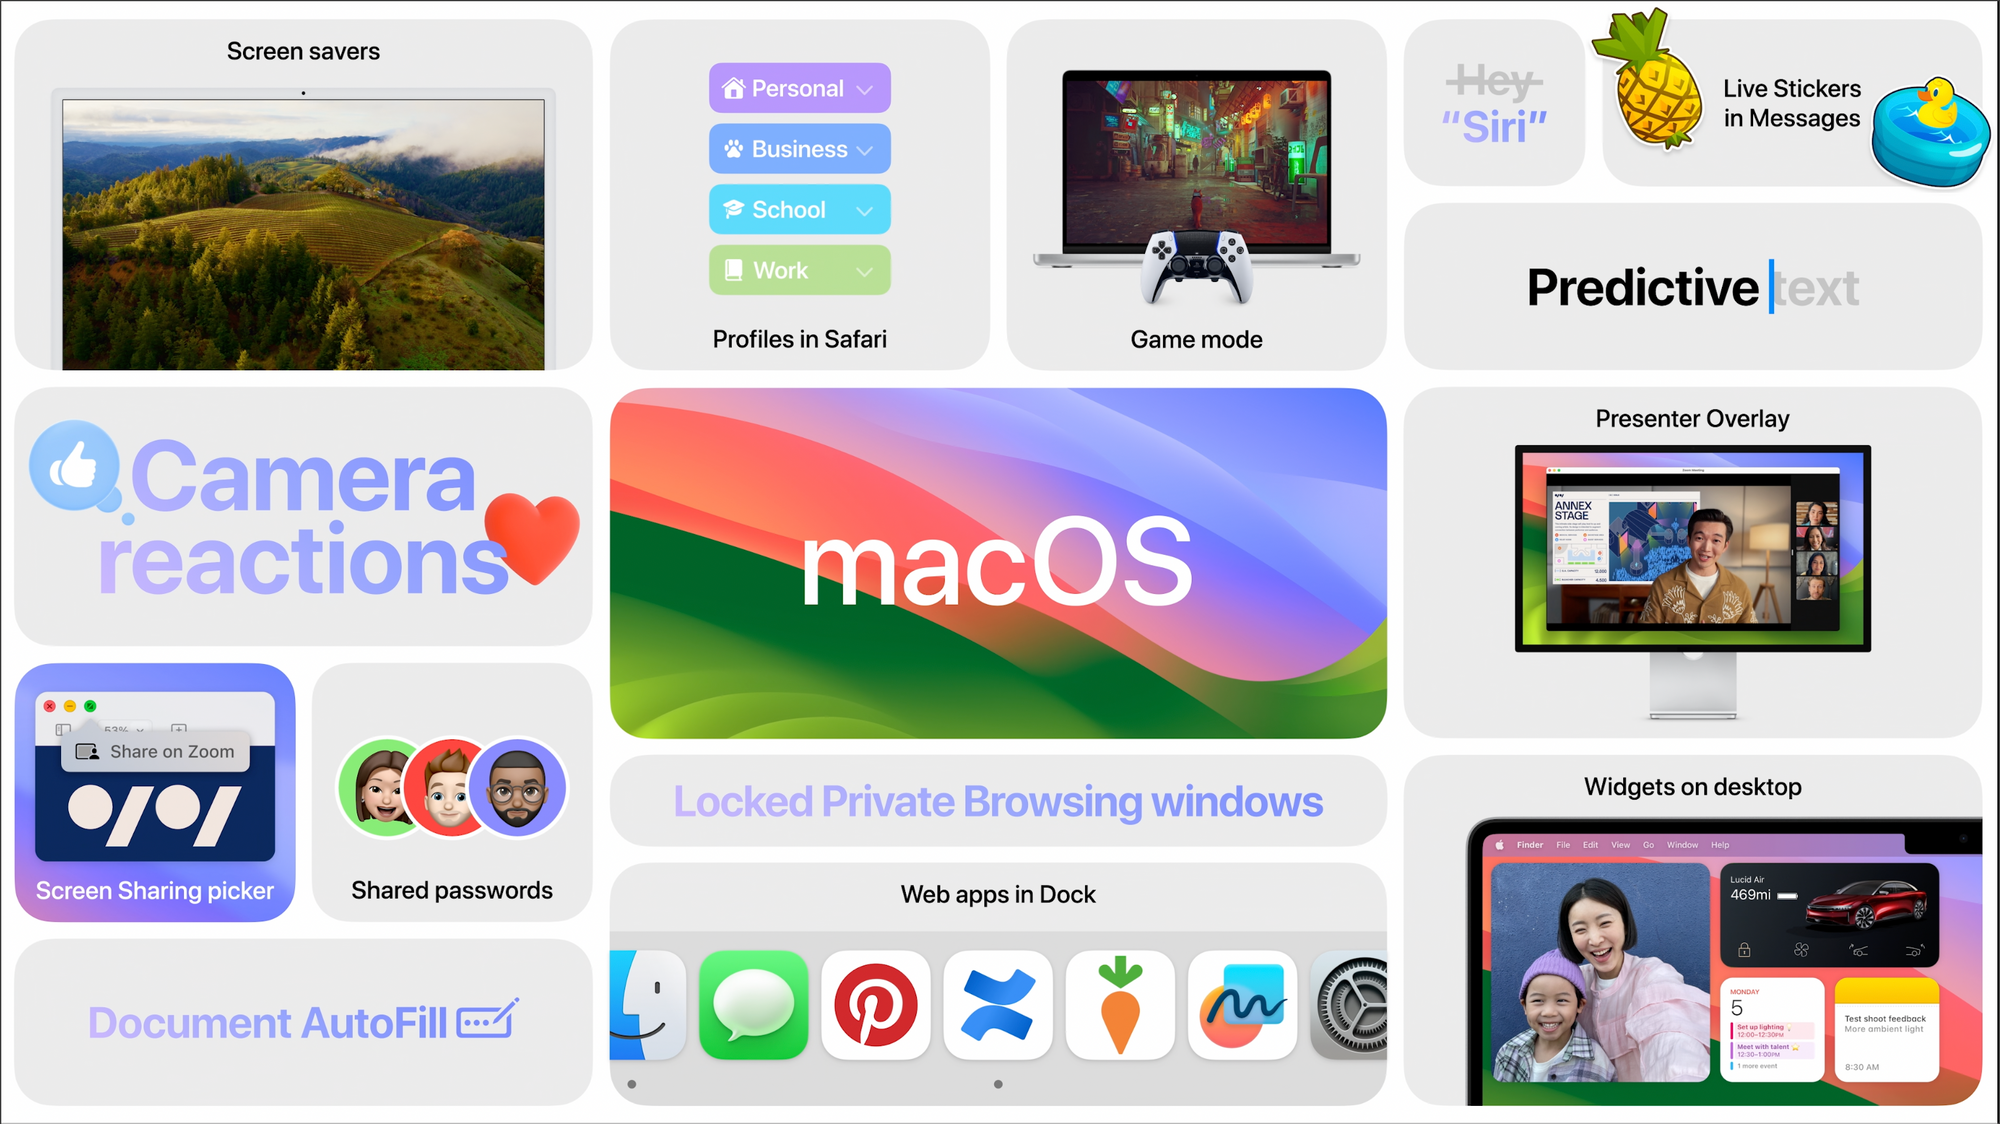 macOS updates summary card